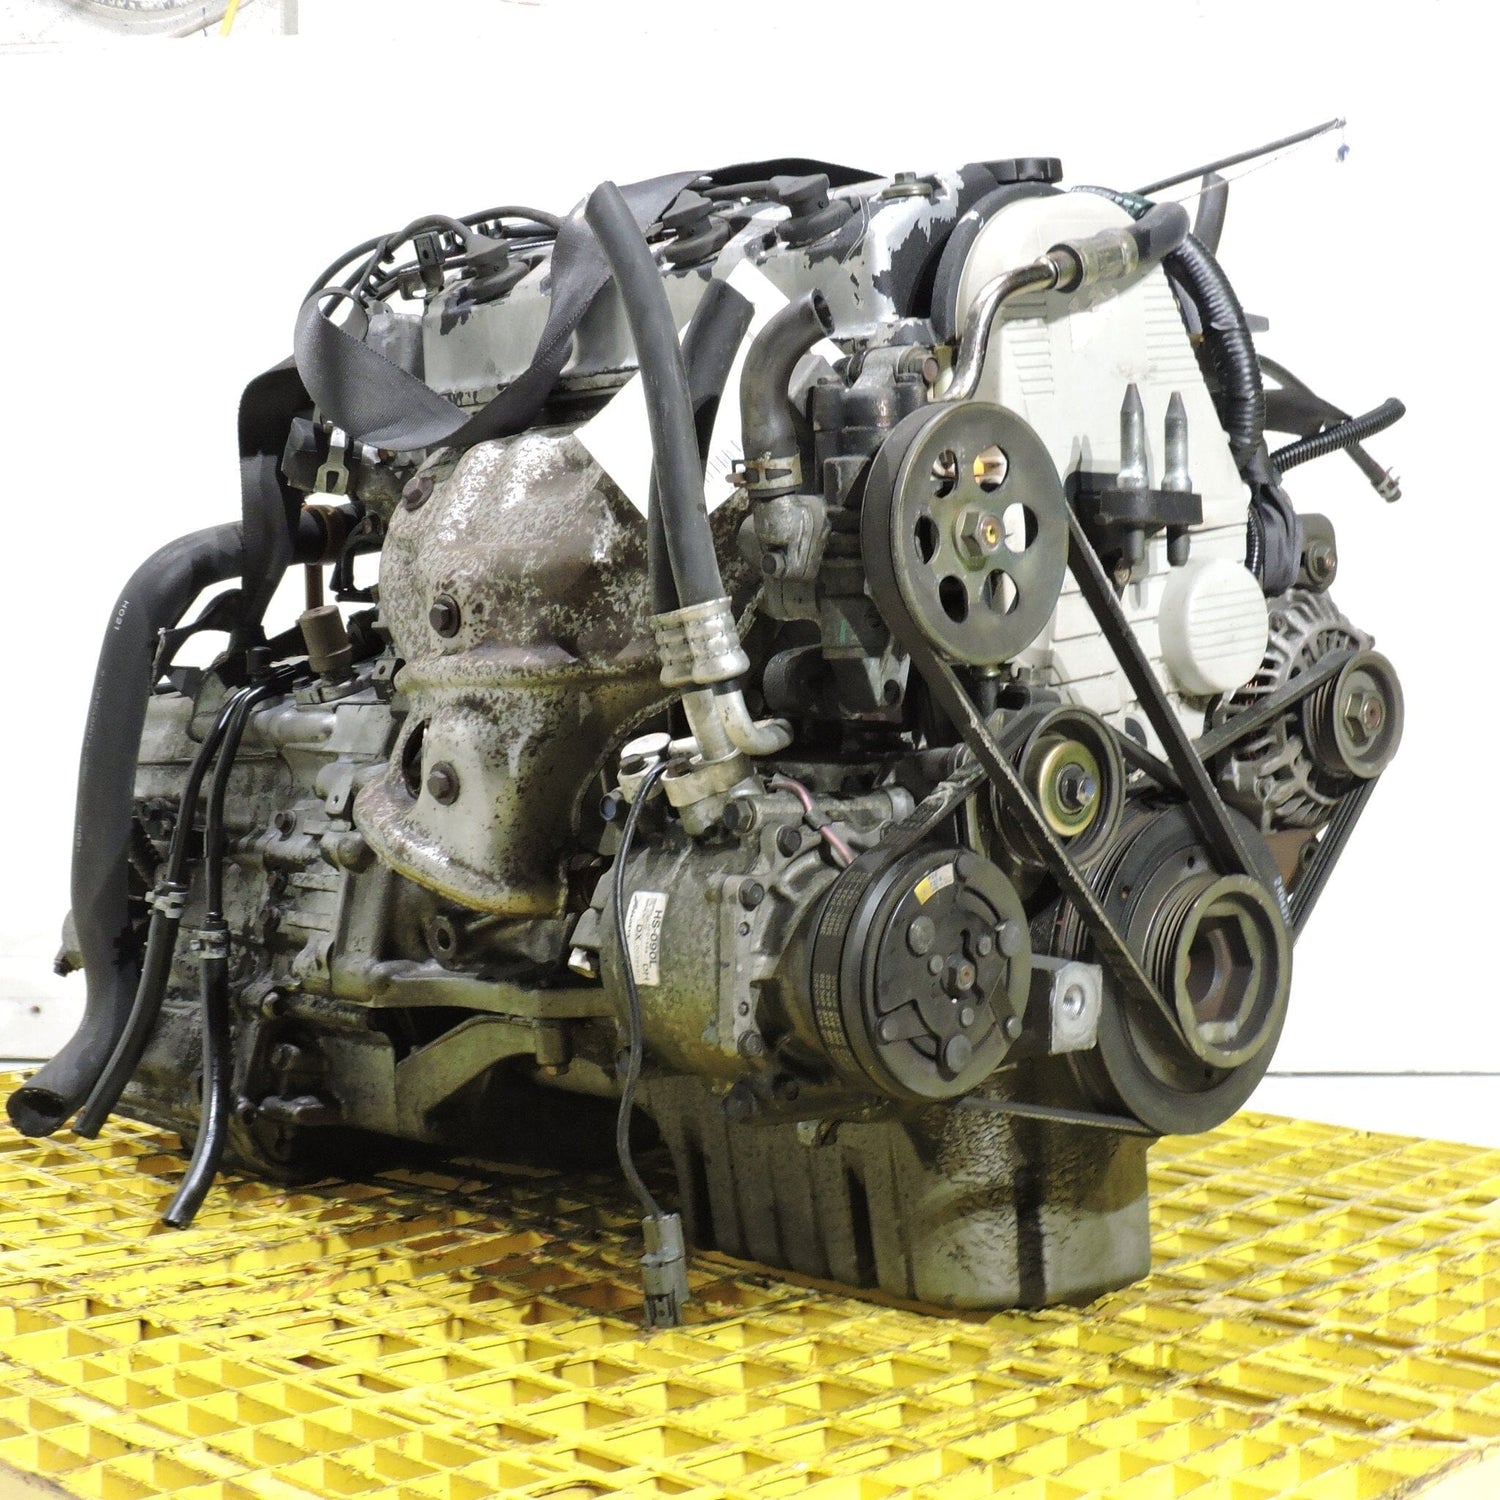 Honda Civic 1992-1995 1.6L 4-Cylinder Sohc Vtec JDM Engine - D16a - Replaces D16y8 (Engine Only)